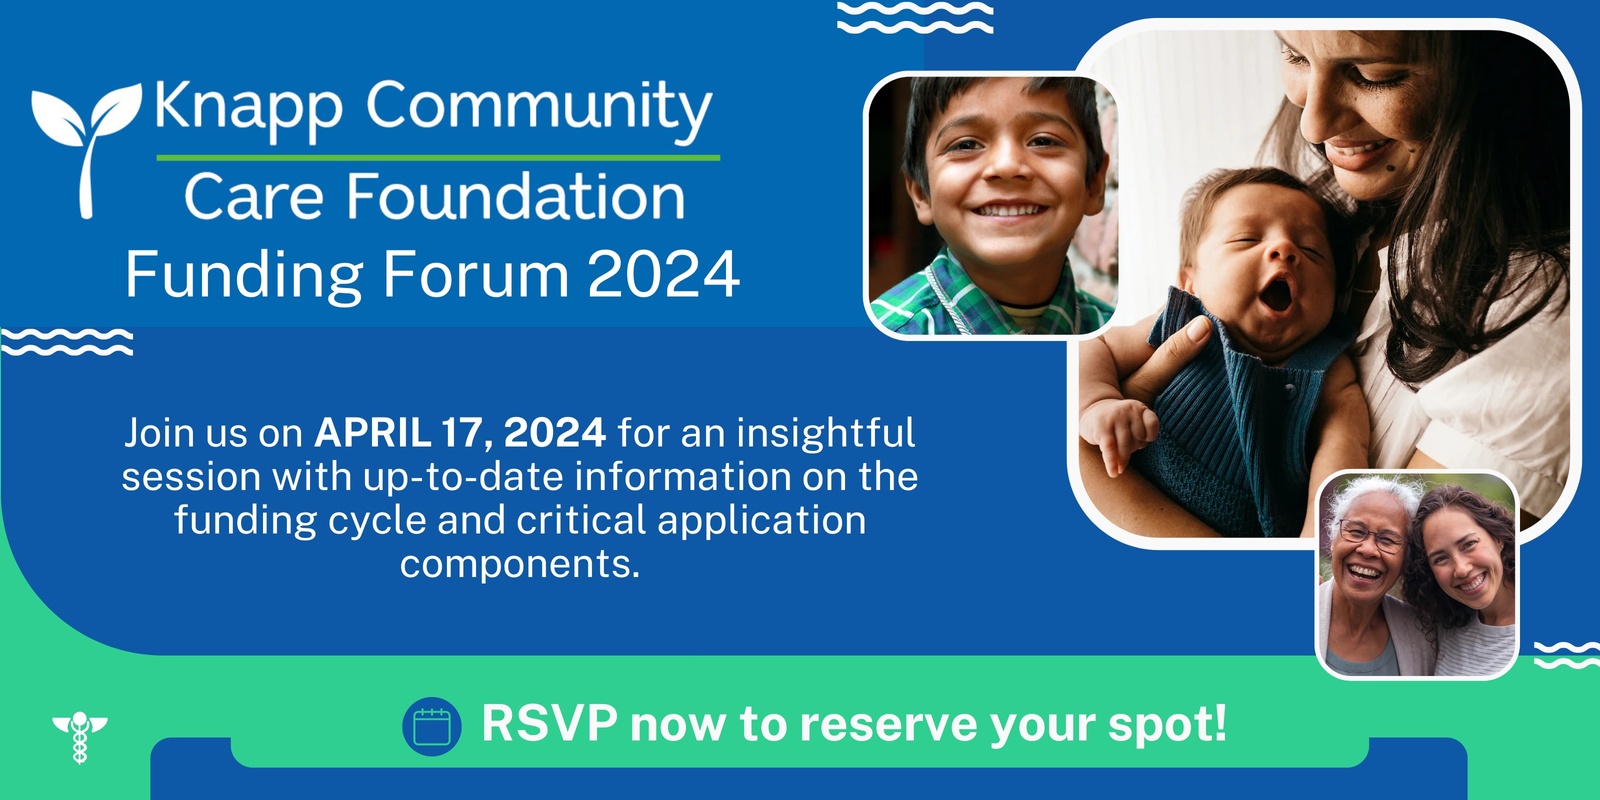 Banner image for Knapp Community Care Foundation Funding Forum 2024